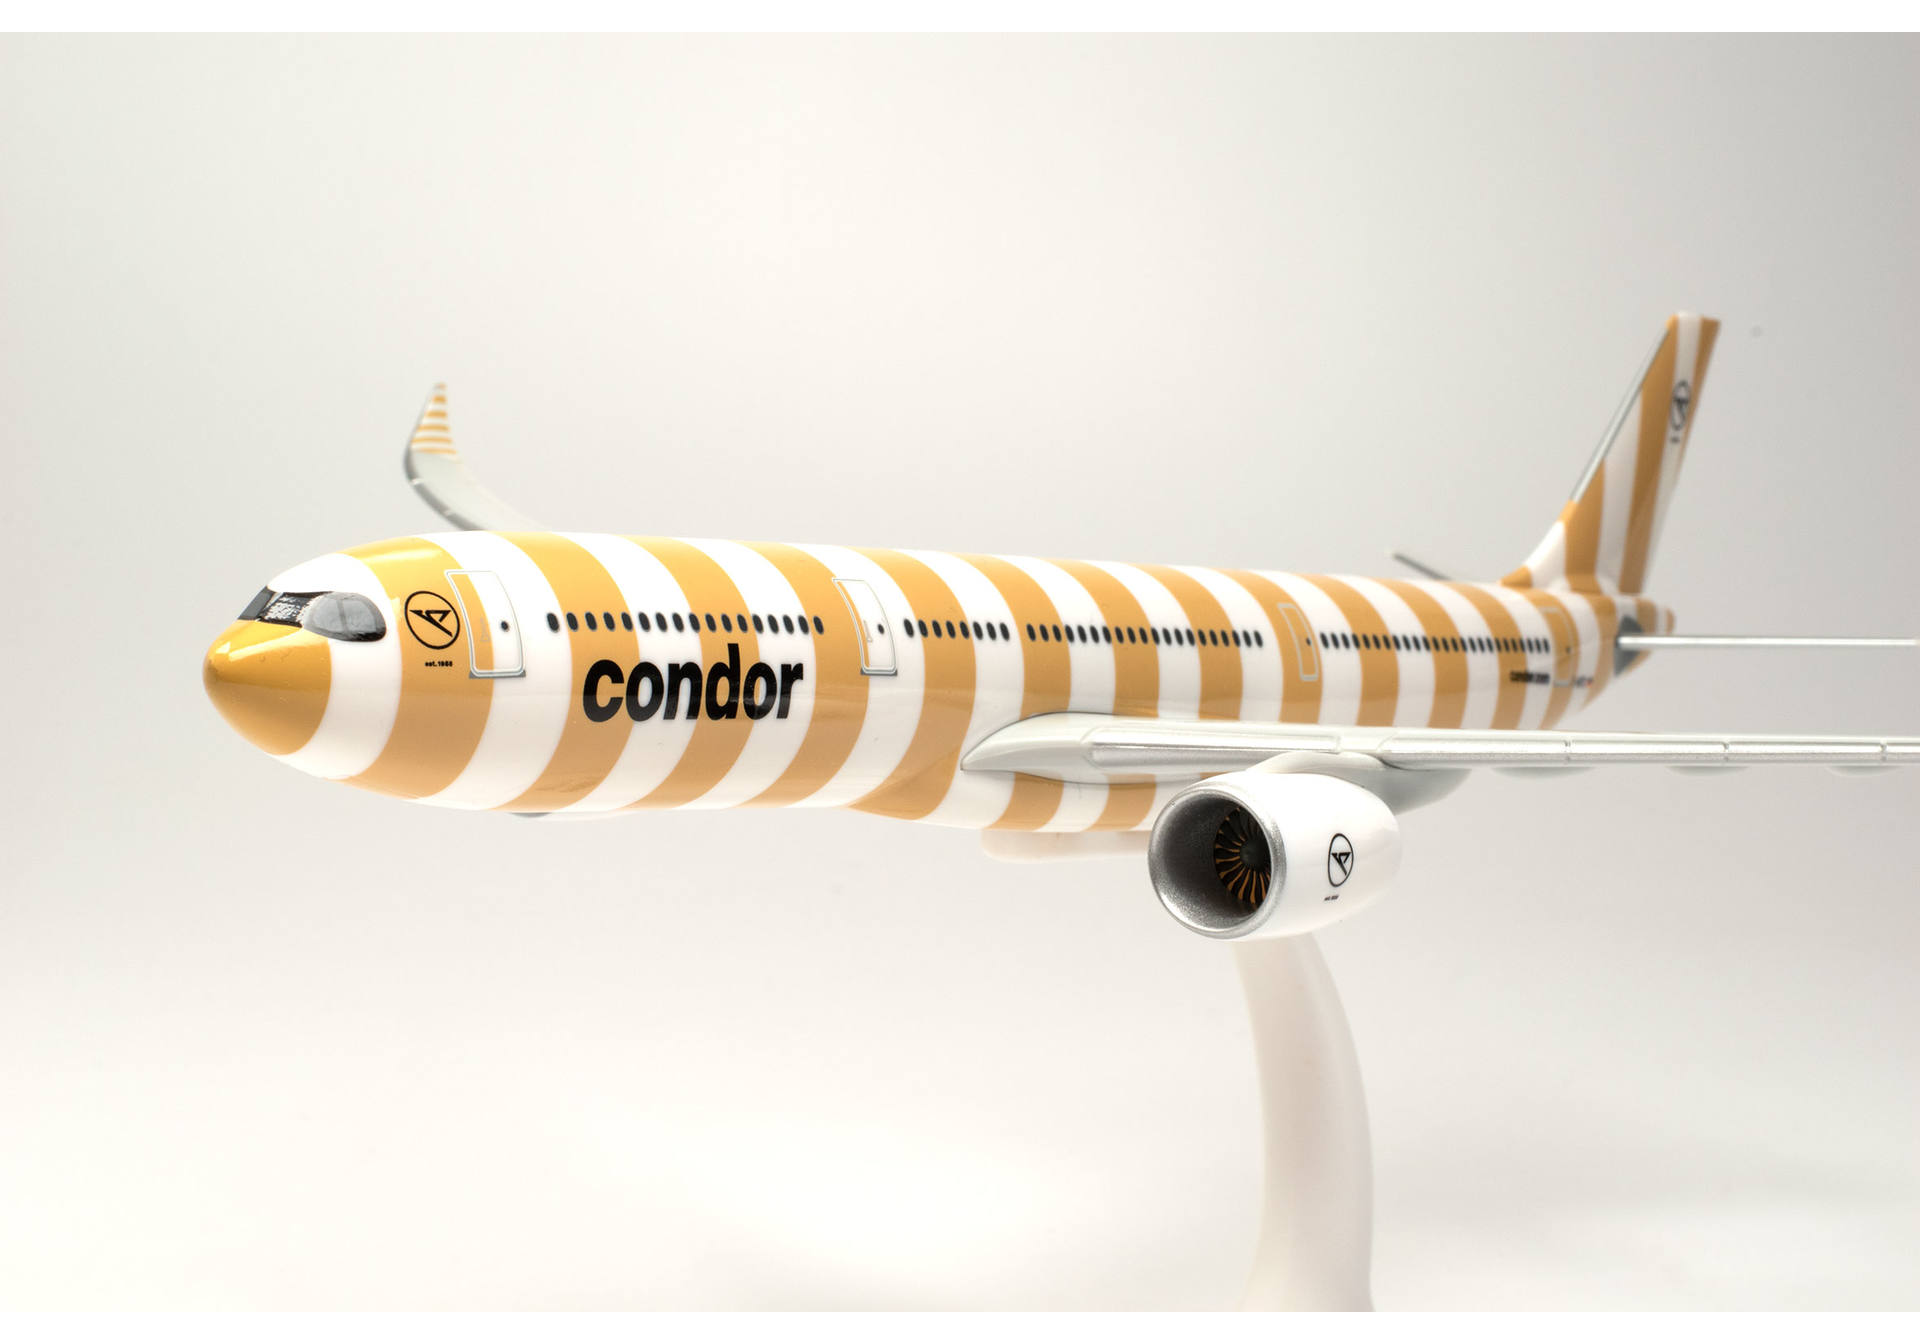 Condor Airbus A330-900neo “Beach” - new 2022 colors – D-ANRC